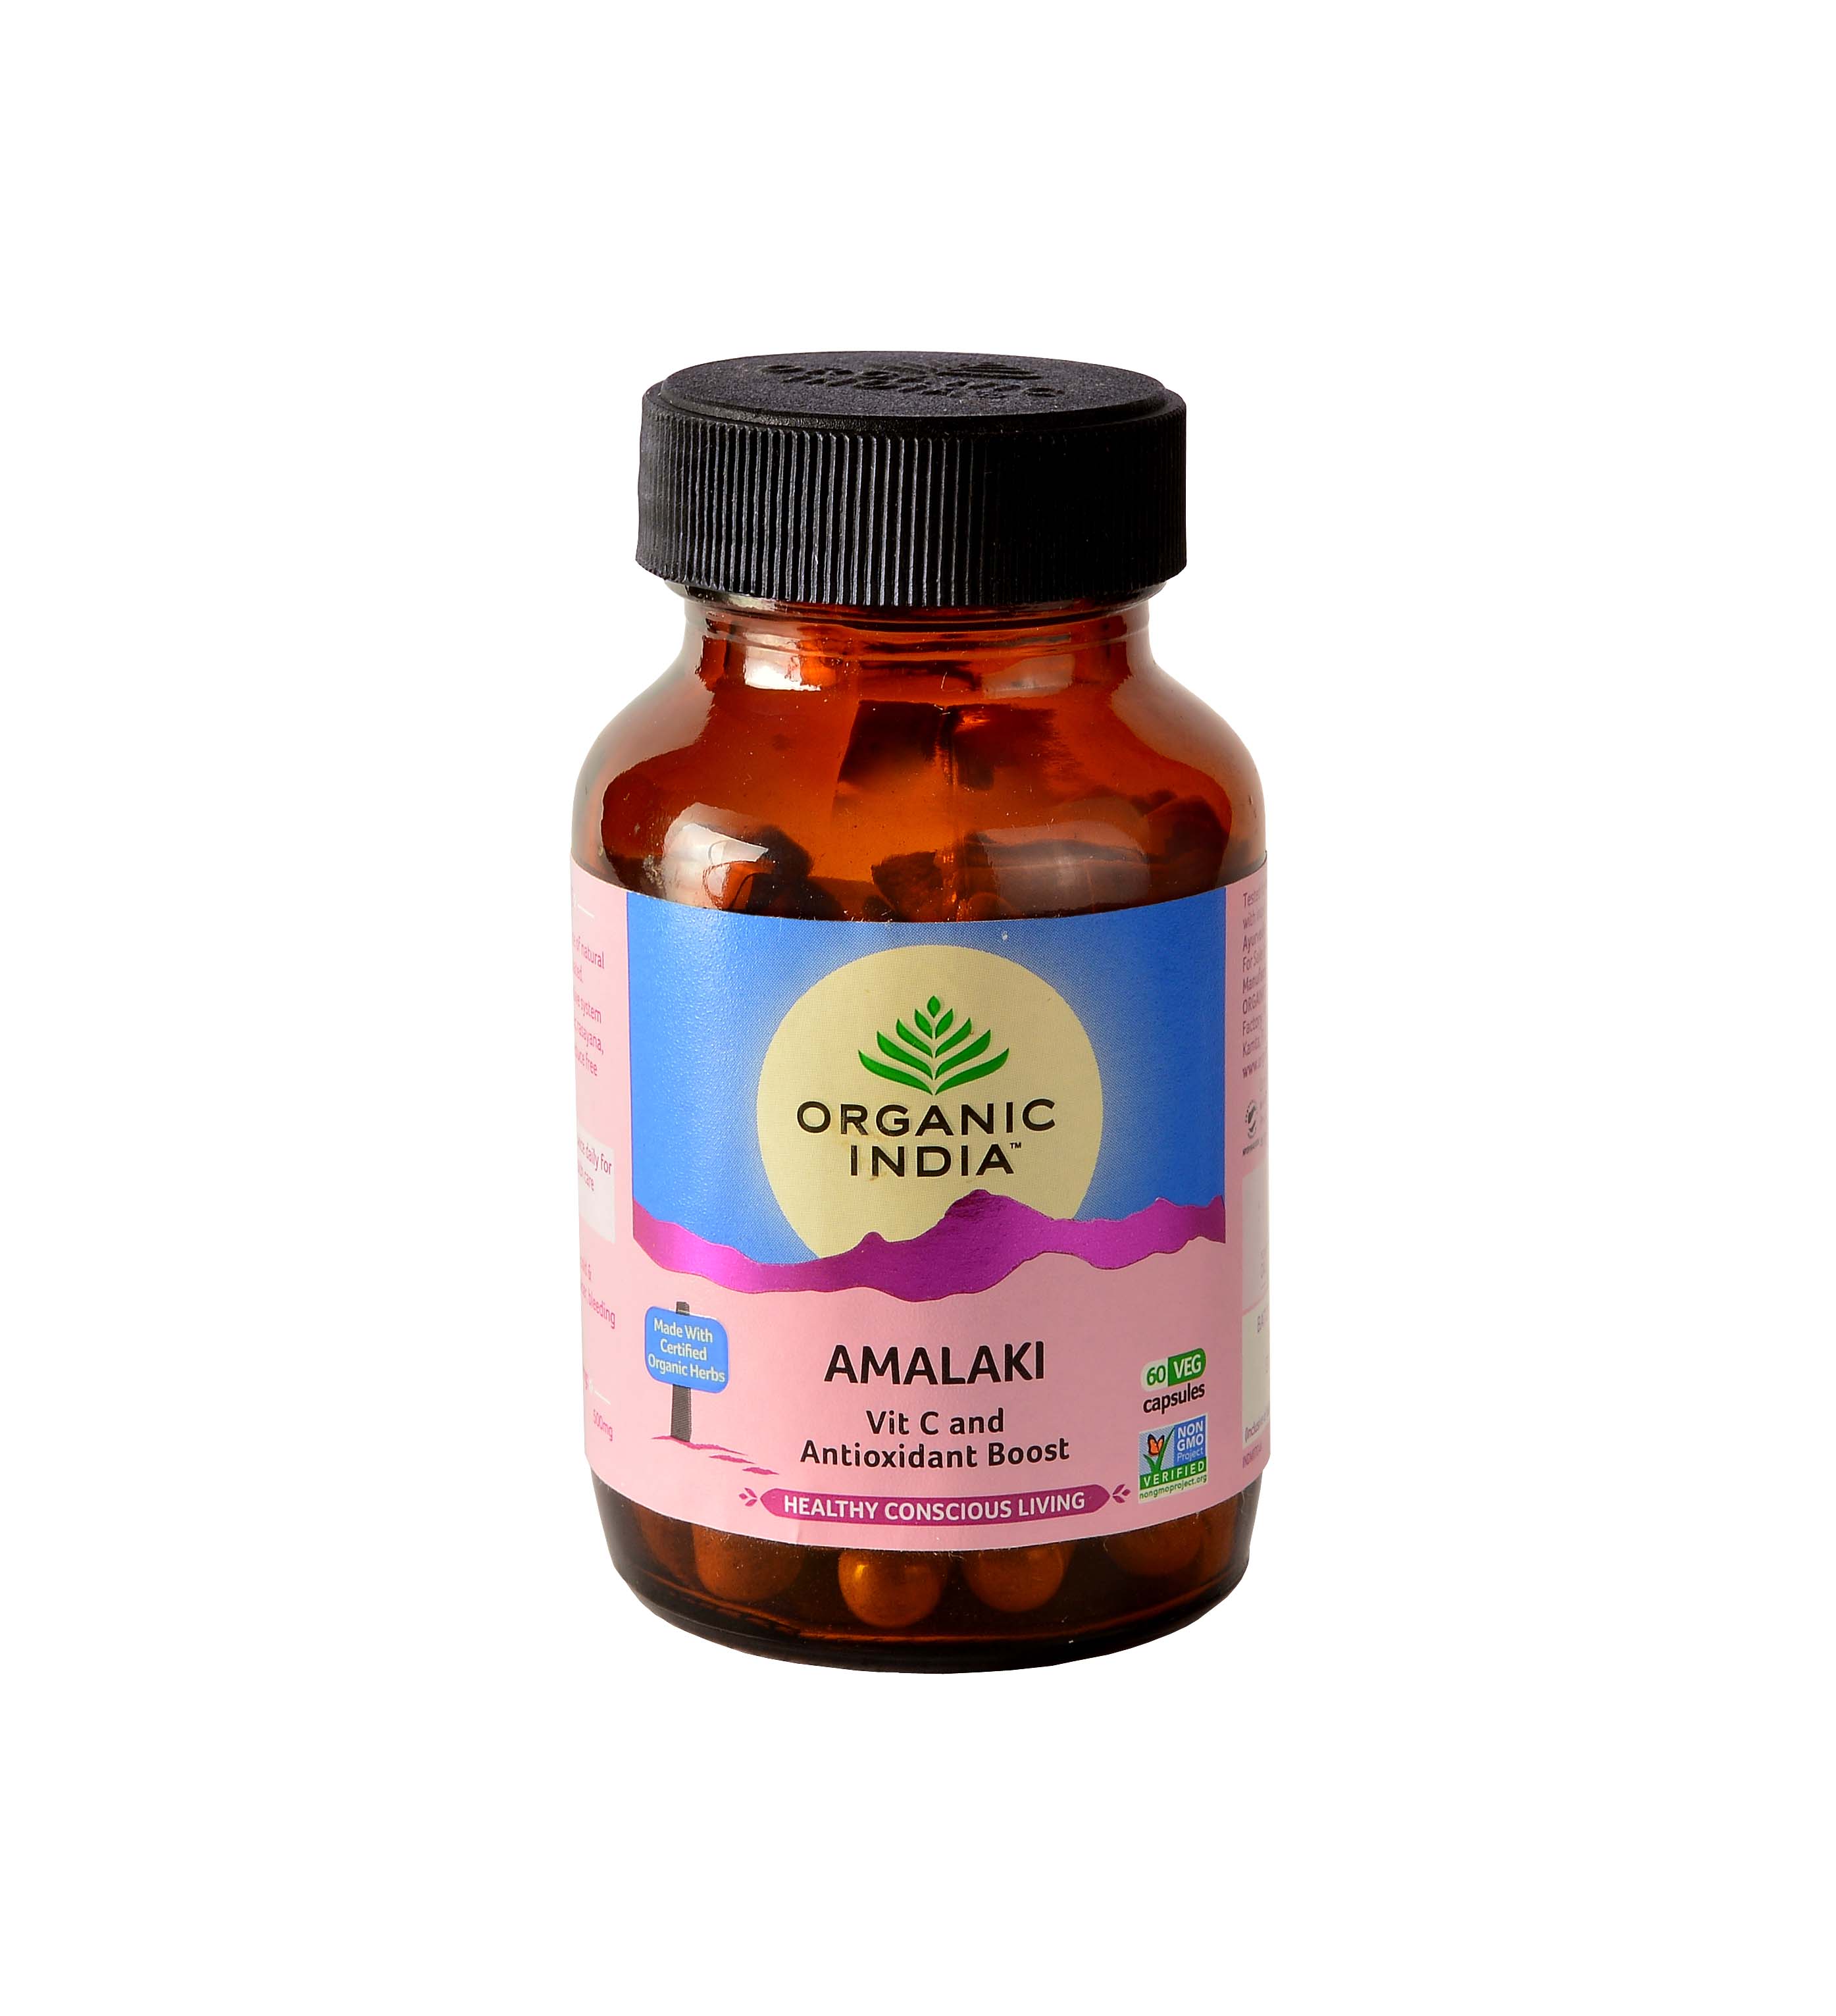 Buy Organic India Amalaki Capsule at Best Price Online